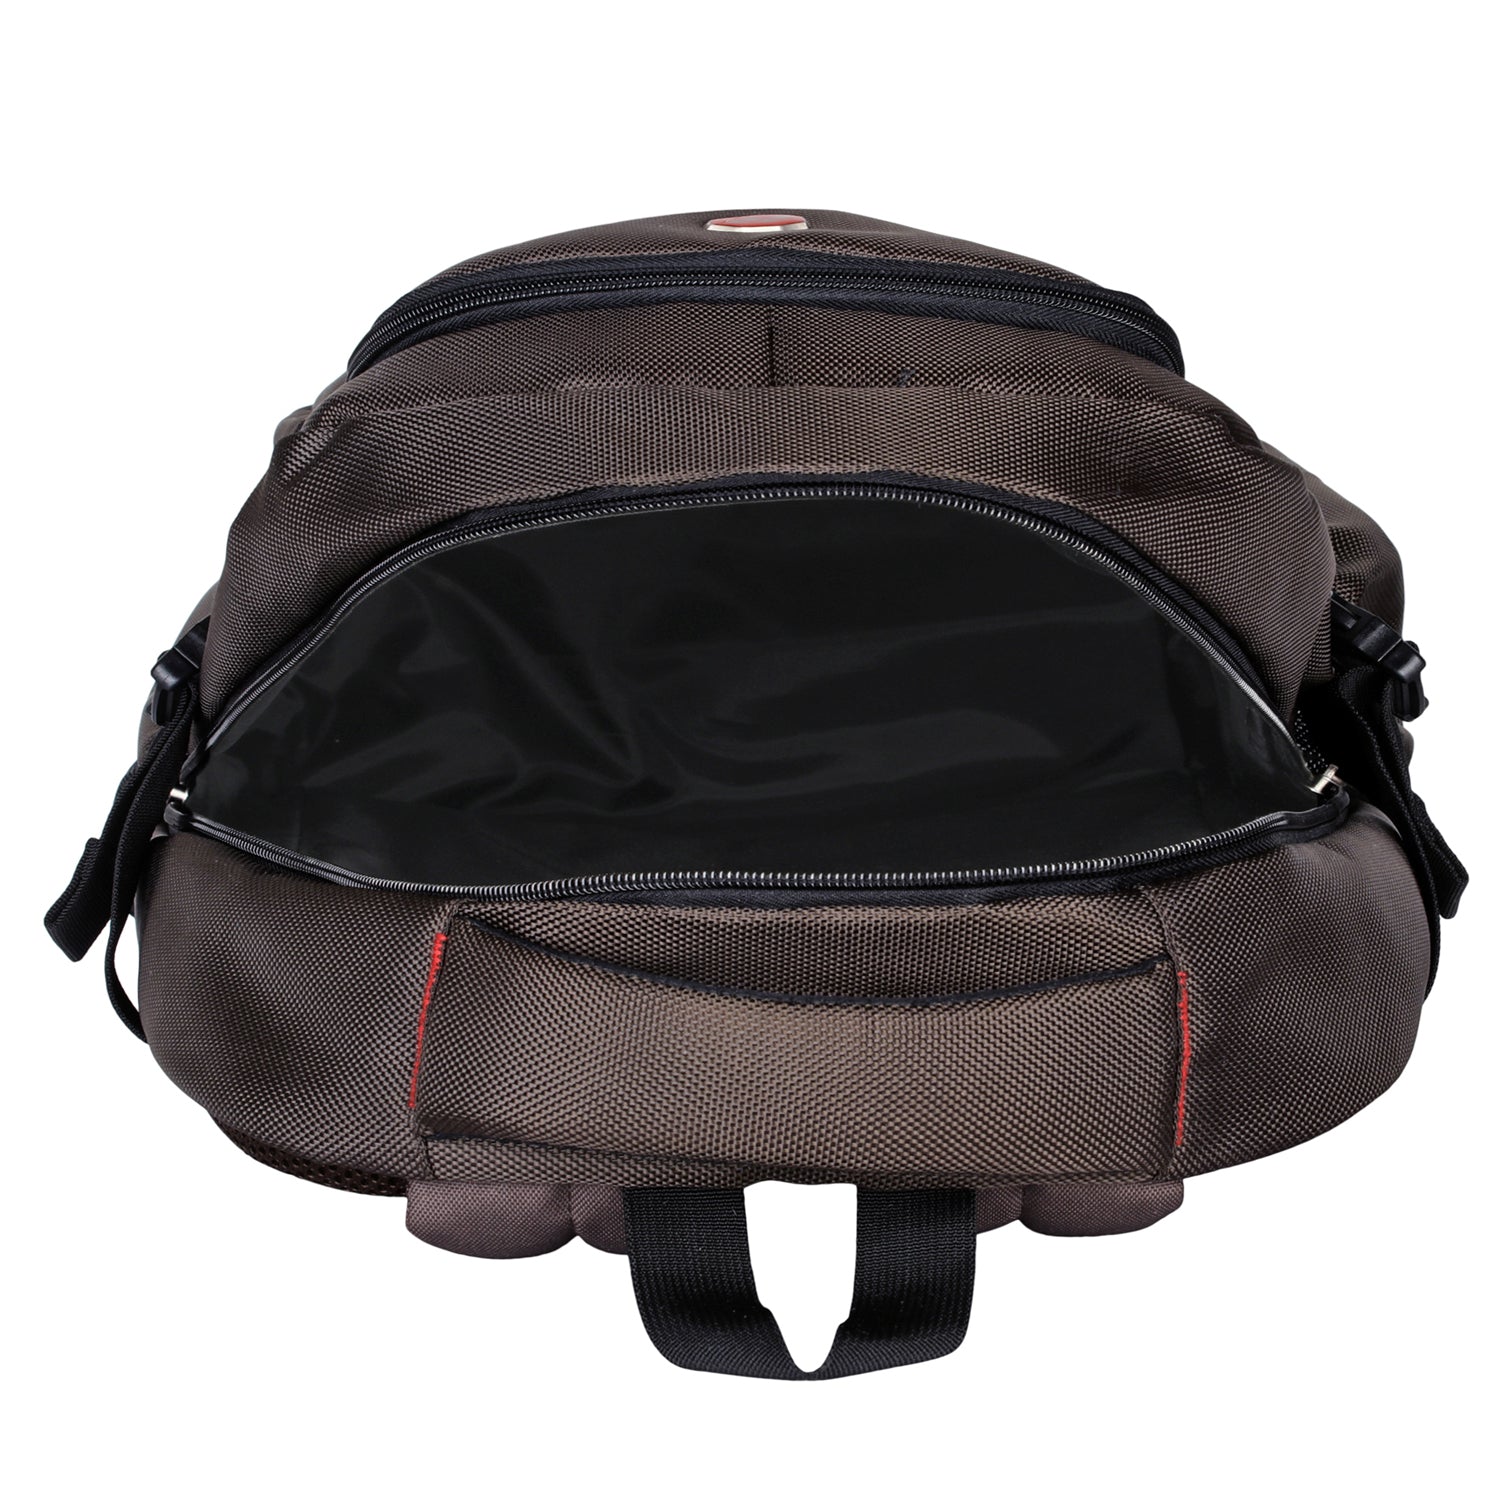 Yonex SUNR H01AO-S Backpack, Coffee - Best Price online Prokicksports.com